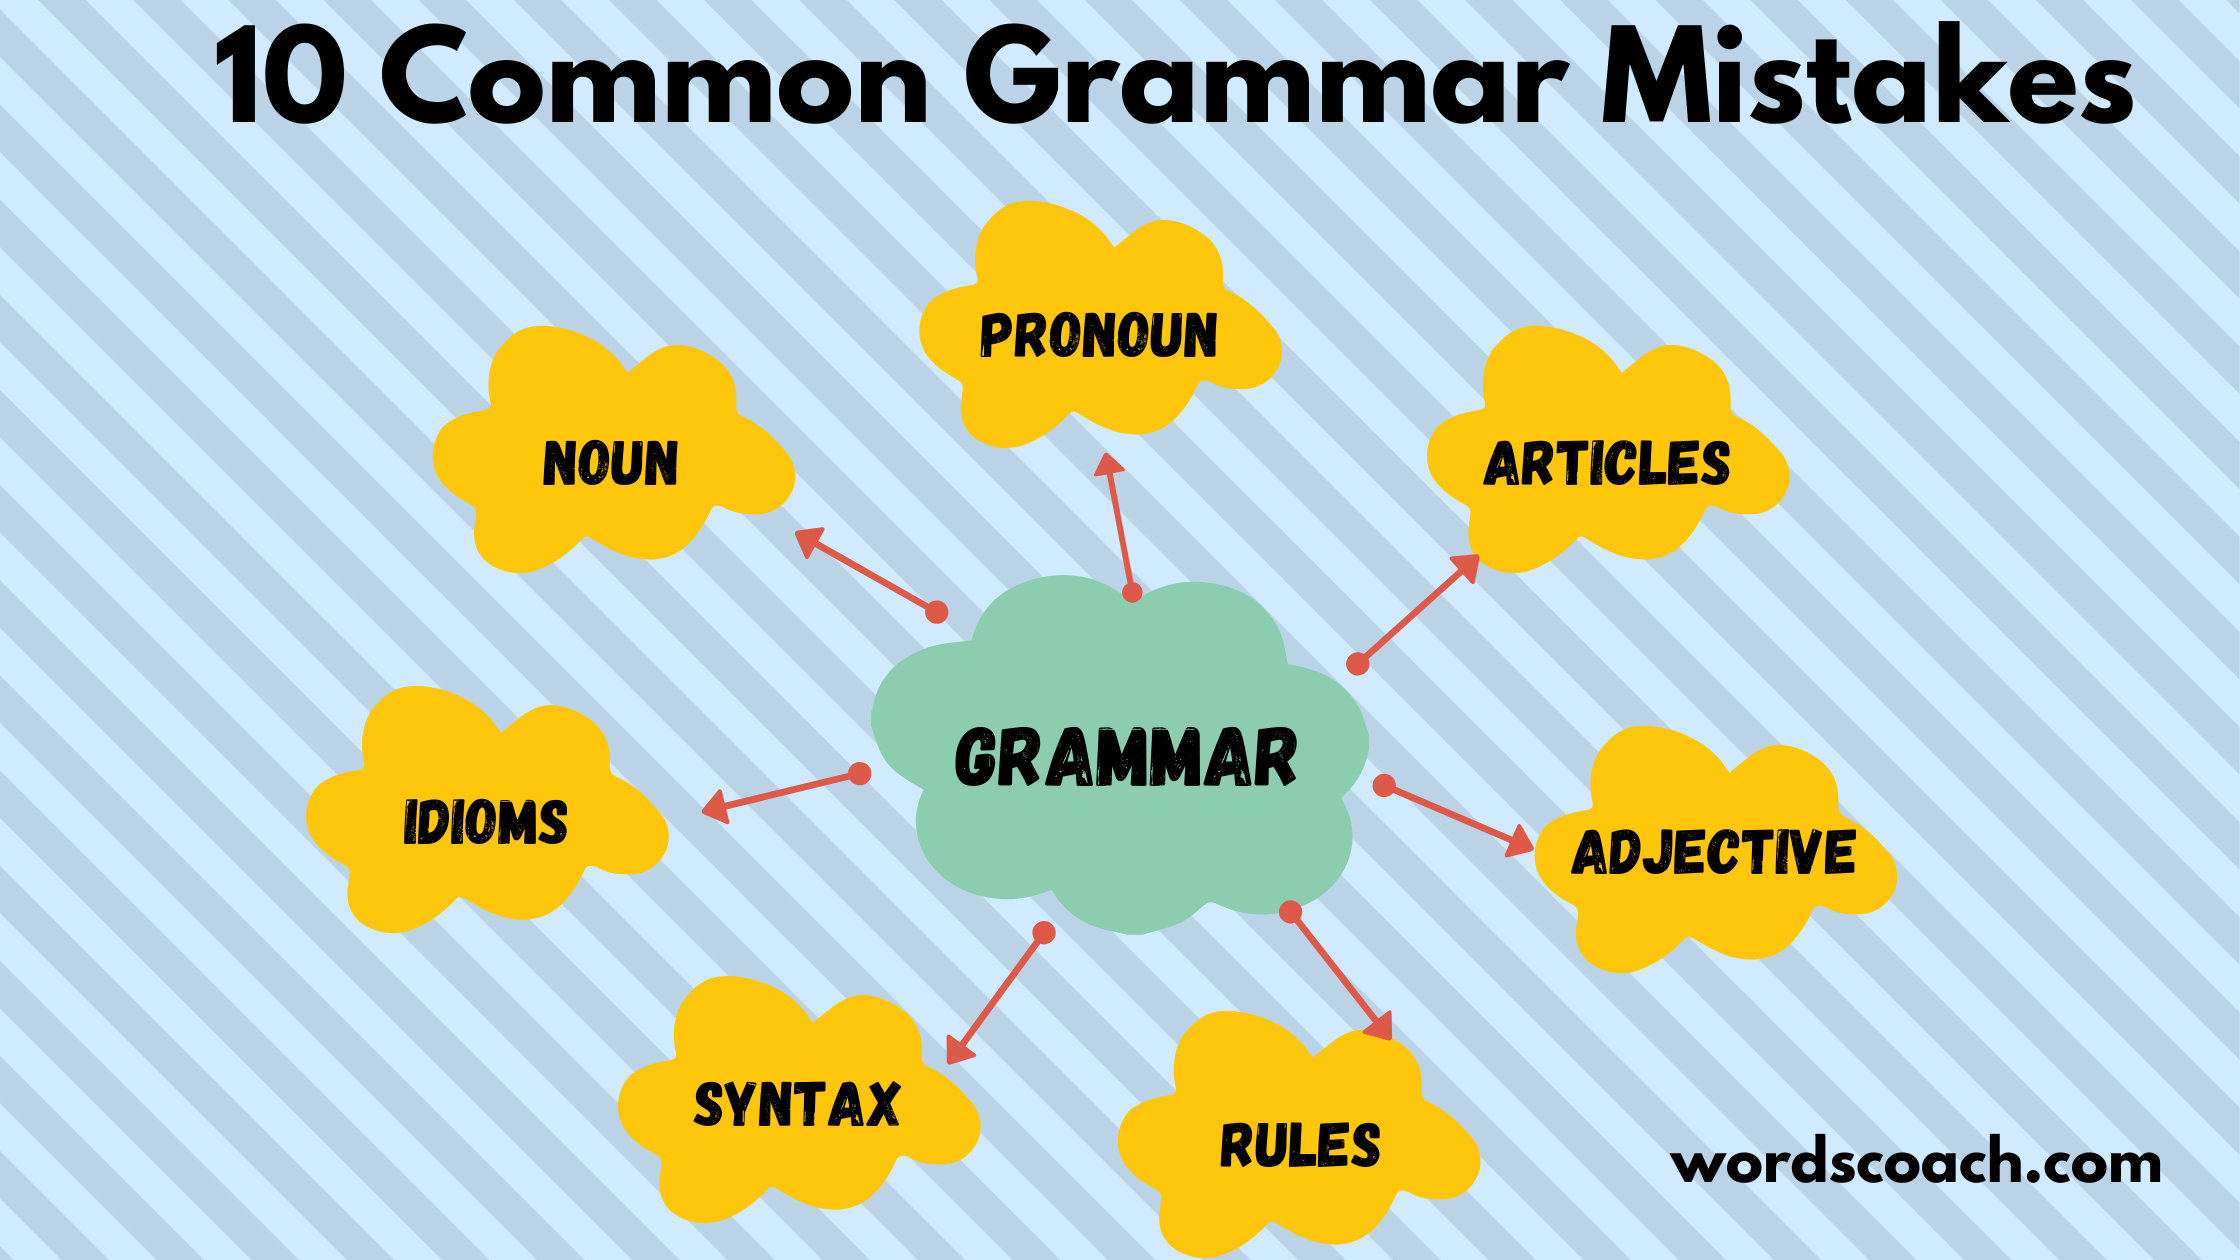 10 Basic Grammar Mistakes You Should Avoid